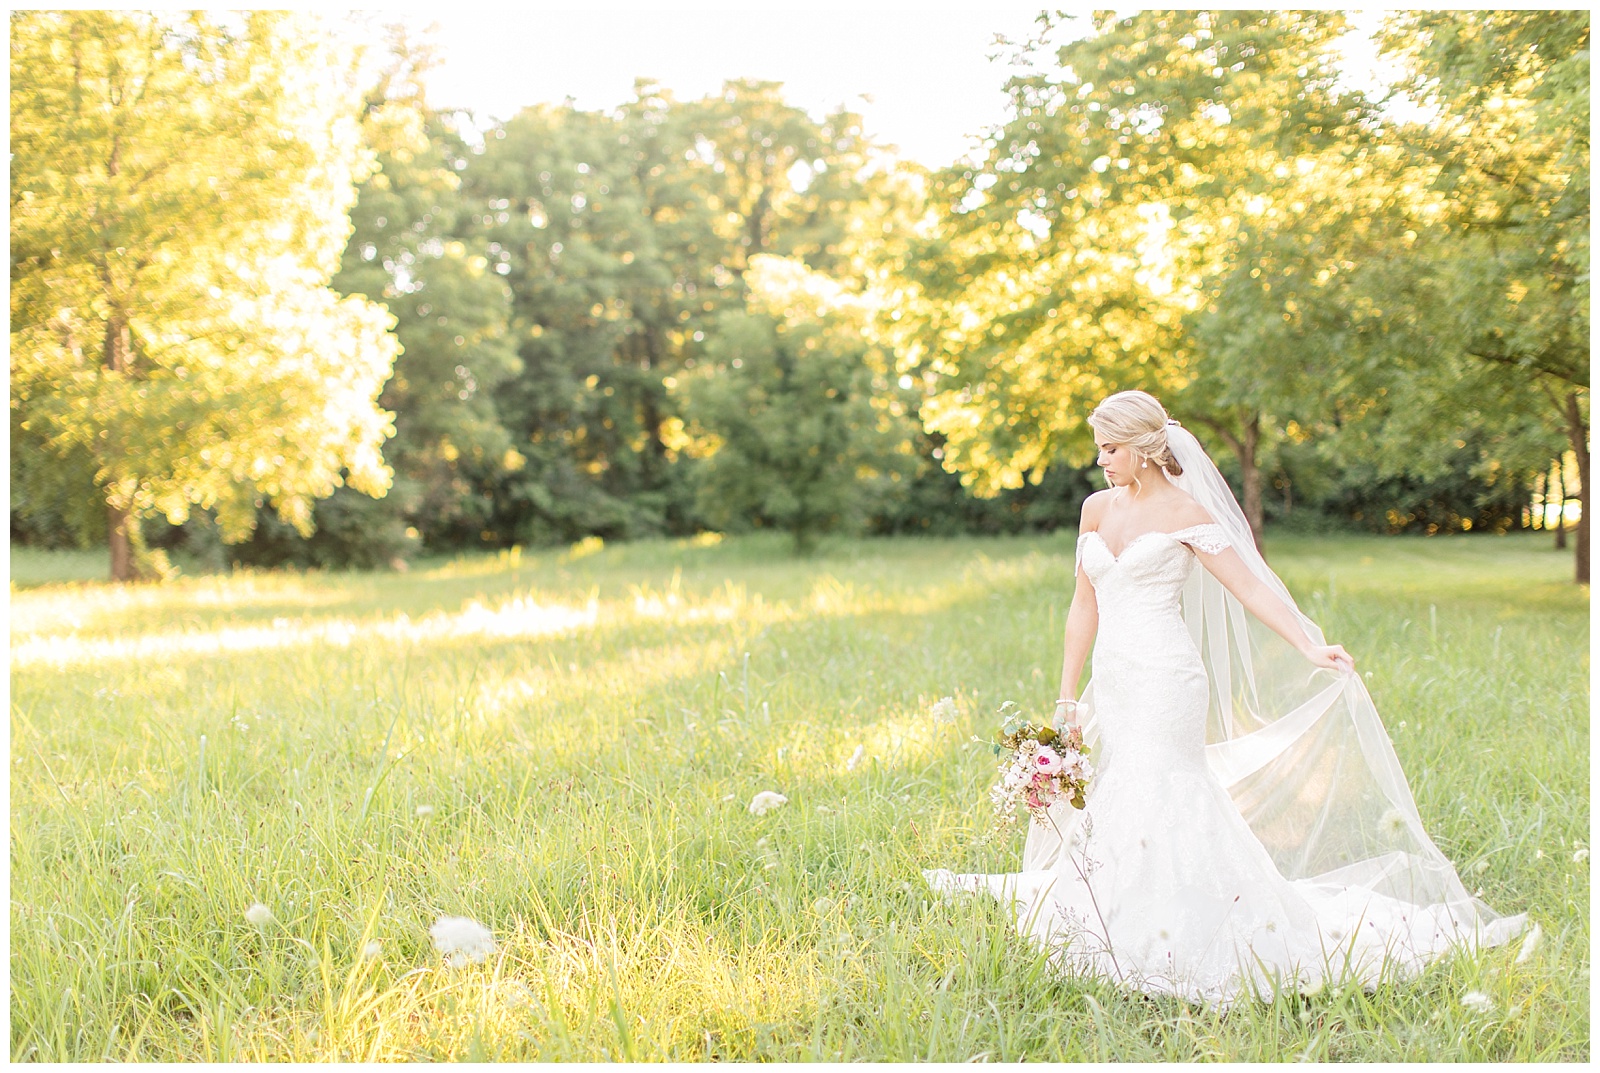 Editing | Katie & Alec Photography the Best Wedding Photographers in Birmingham, Alabama